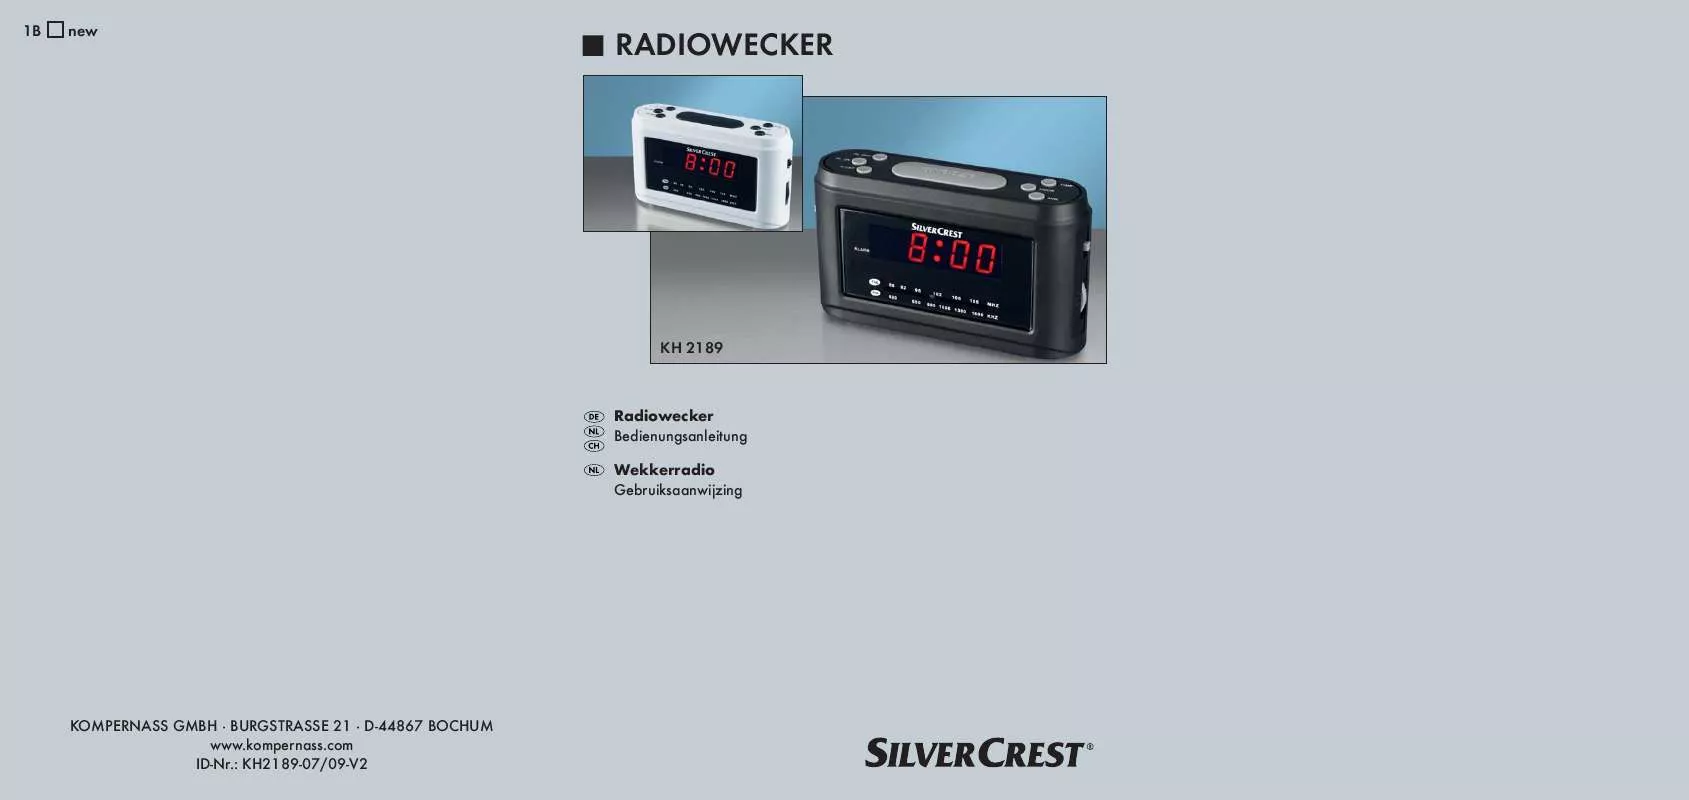 Mode d'emploi SILVERCREST KH 2189 CLOCK RADIO